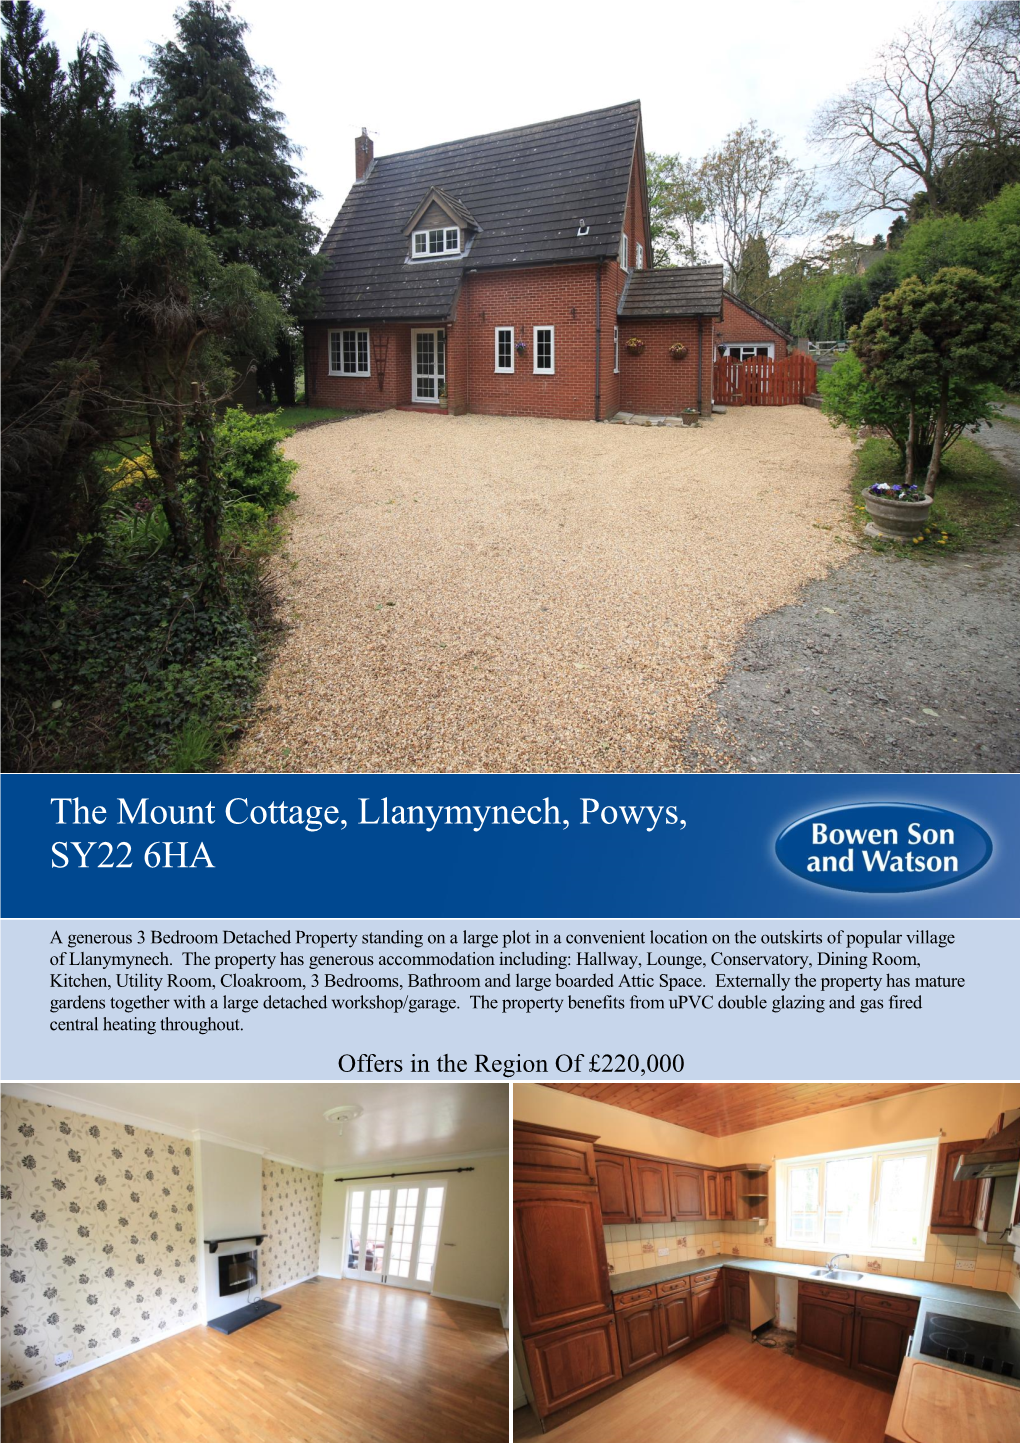 The Mount Cottage, Llanymynech, Powys, SY22 6HA